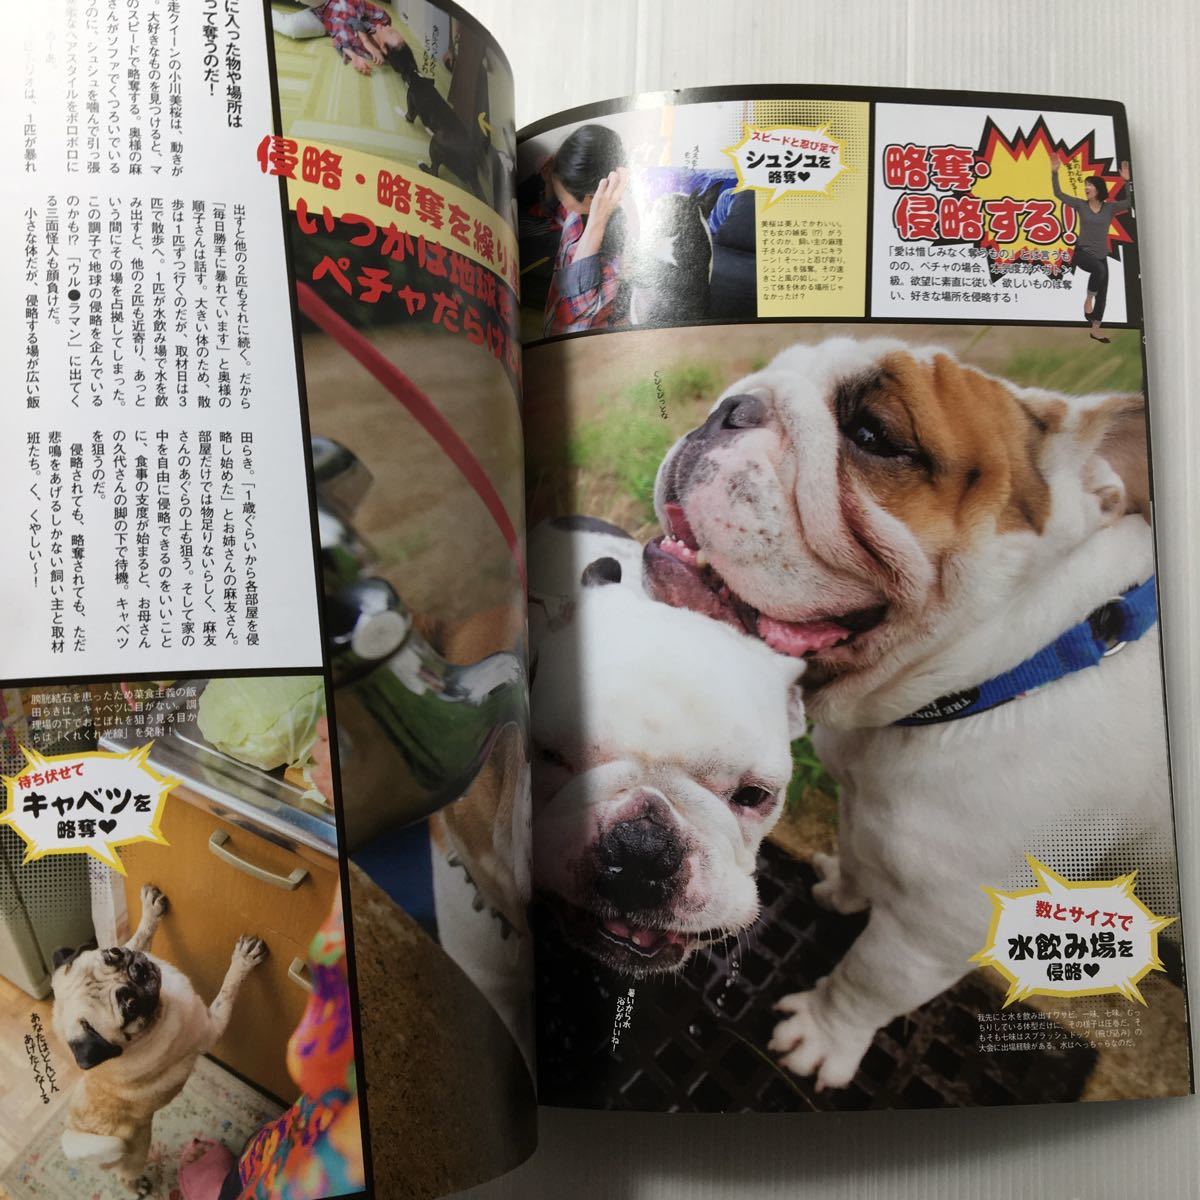 zaa-169!PE*CHA Vol.19 (ta loading Mucc ) nose pe.. dog speciality magazine 2016/10/31f Rebel * Pug * Boss telietc